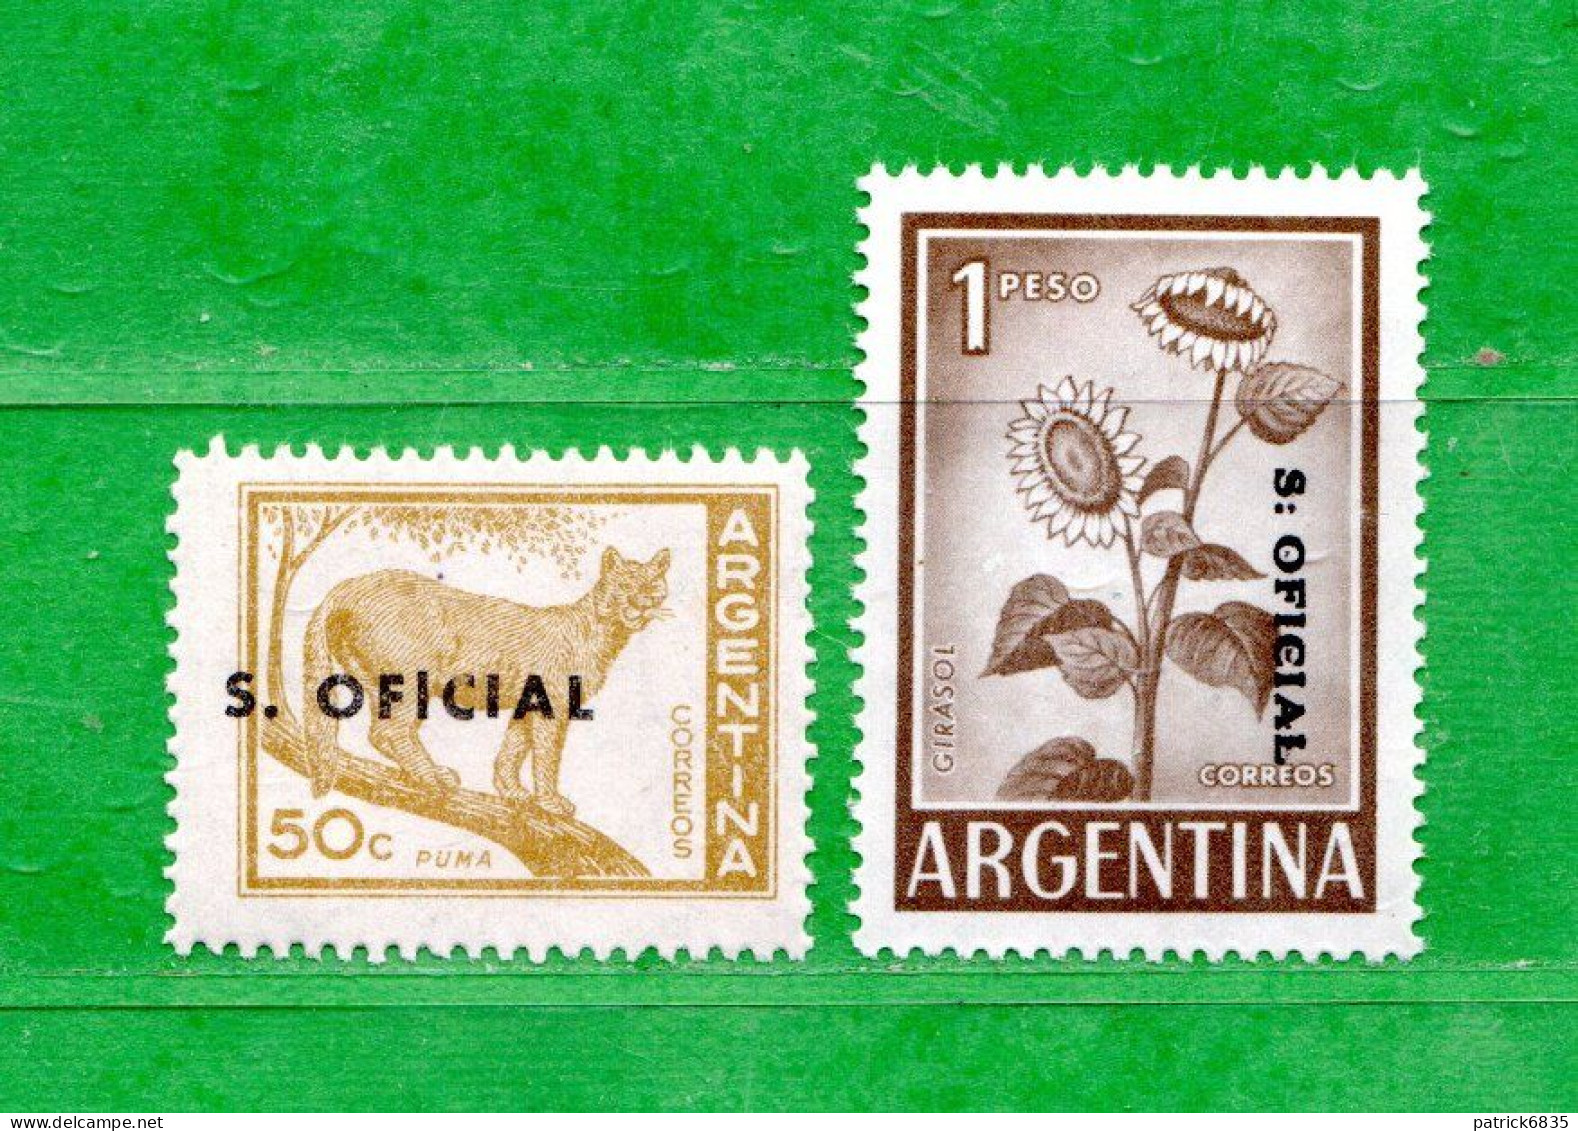 (Mn.1 ) Argentina - ** 1959- S.OFICIAL - PUMA - Tournesol.  Yvert  383-386A.  MNH** - Oficiales